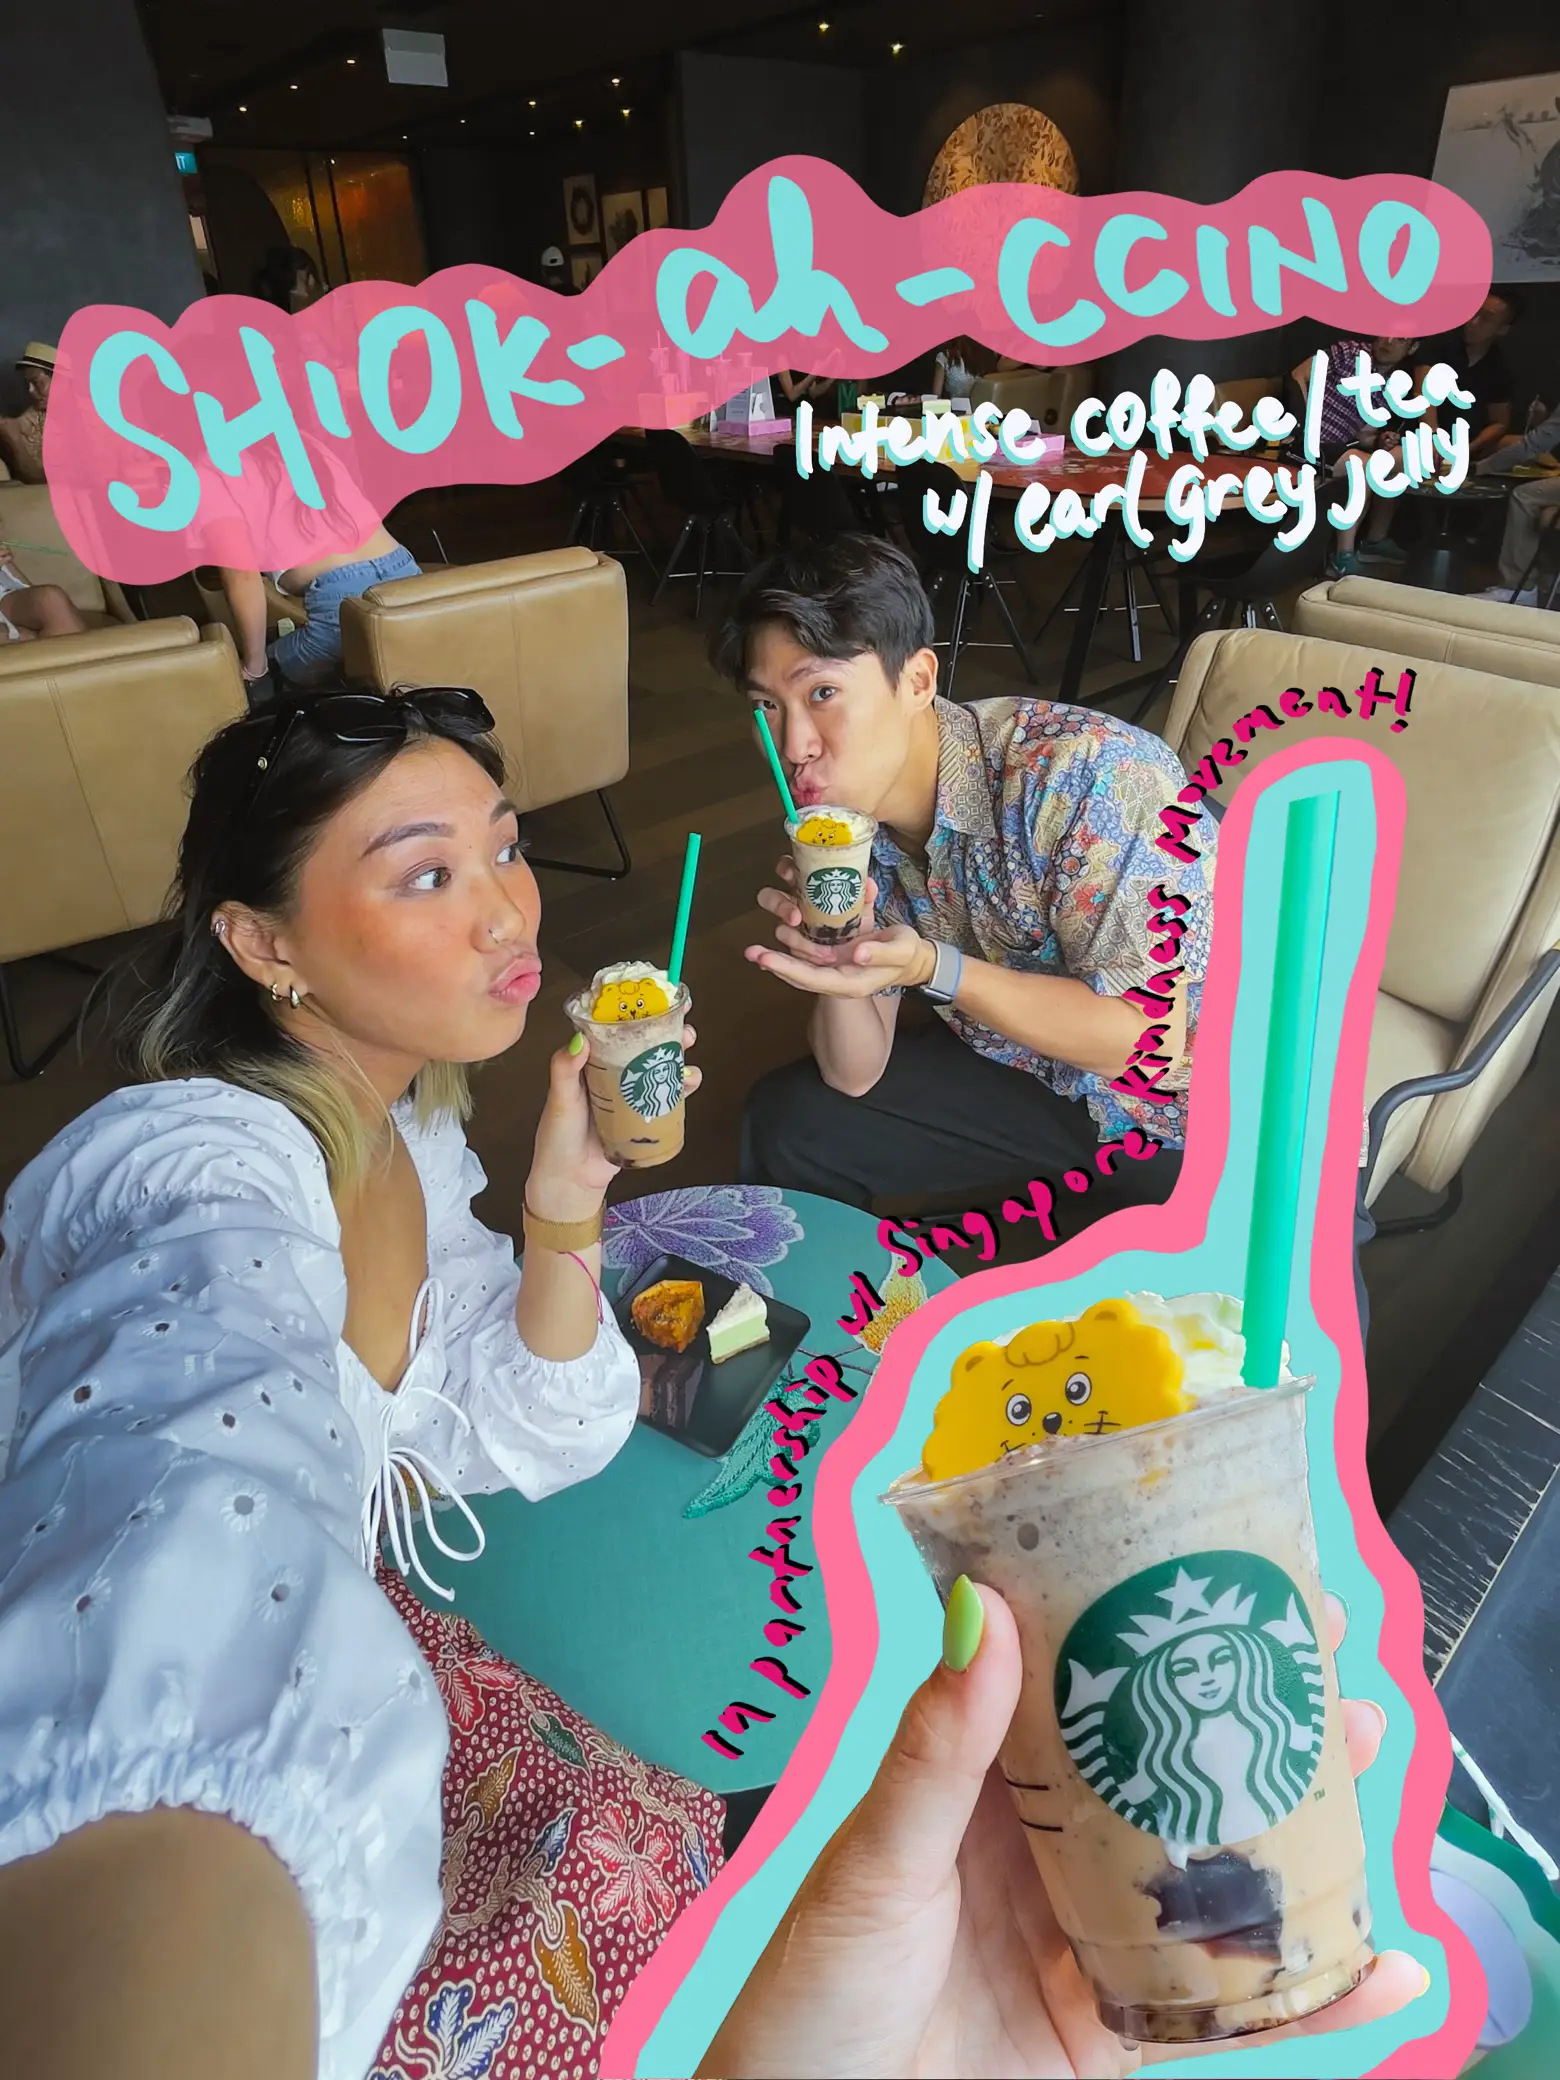 Starbucks’ Prettiest Collaboration Yet!'s images(3)